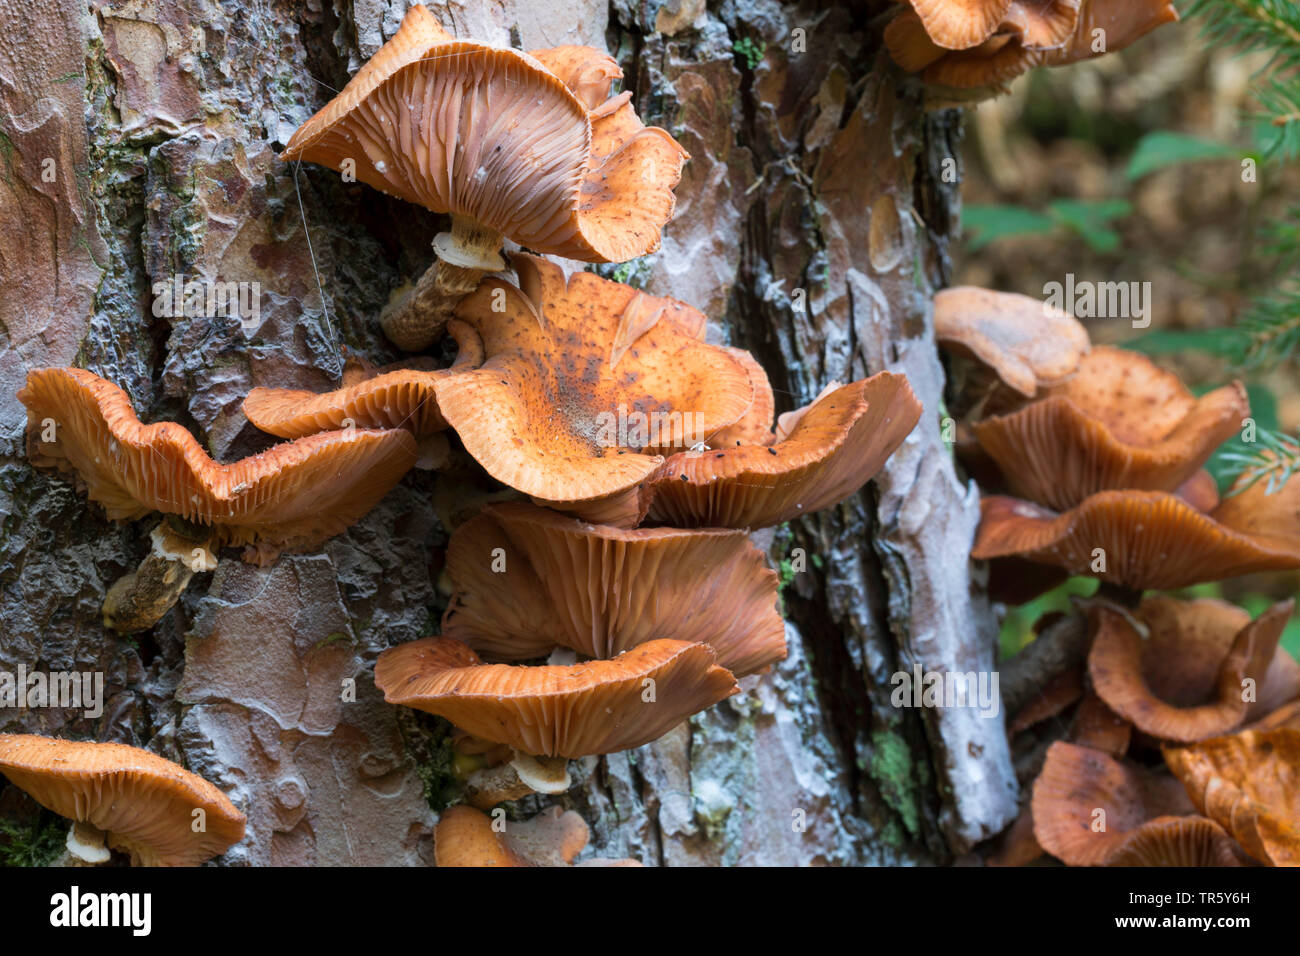 Dark honey fungus, Honey mushroom (Armillaria ostoyae, Armillariella polymyces, Armillaria solidipes), at a trunkf of a pine, Germany Stock Photo